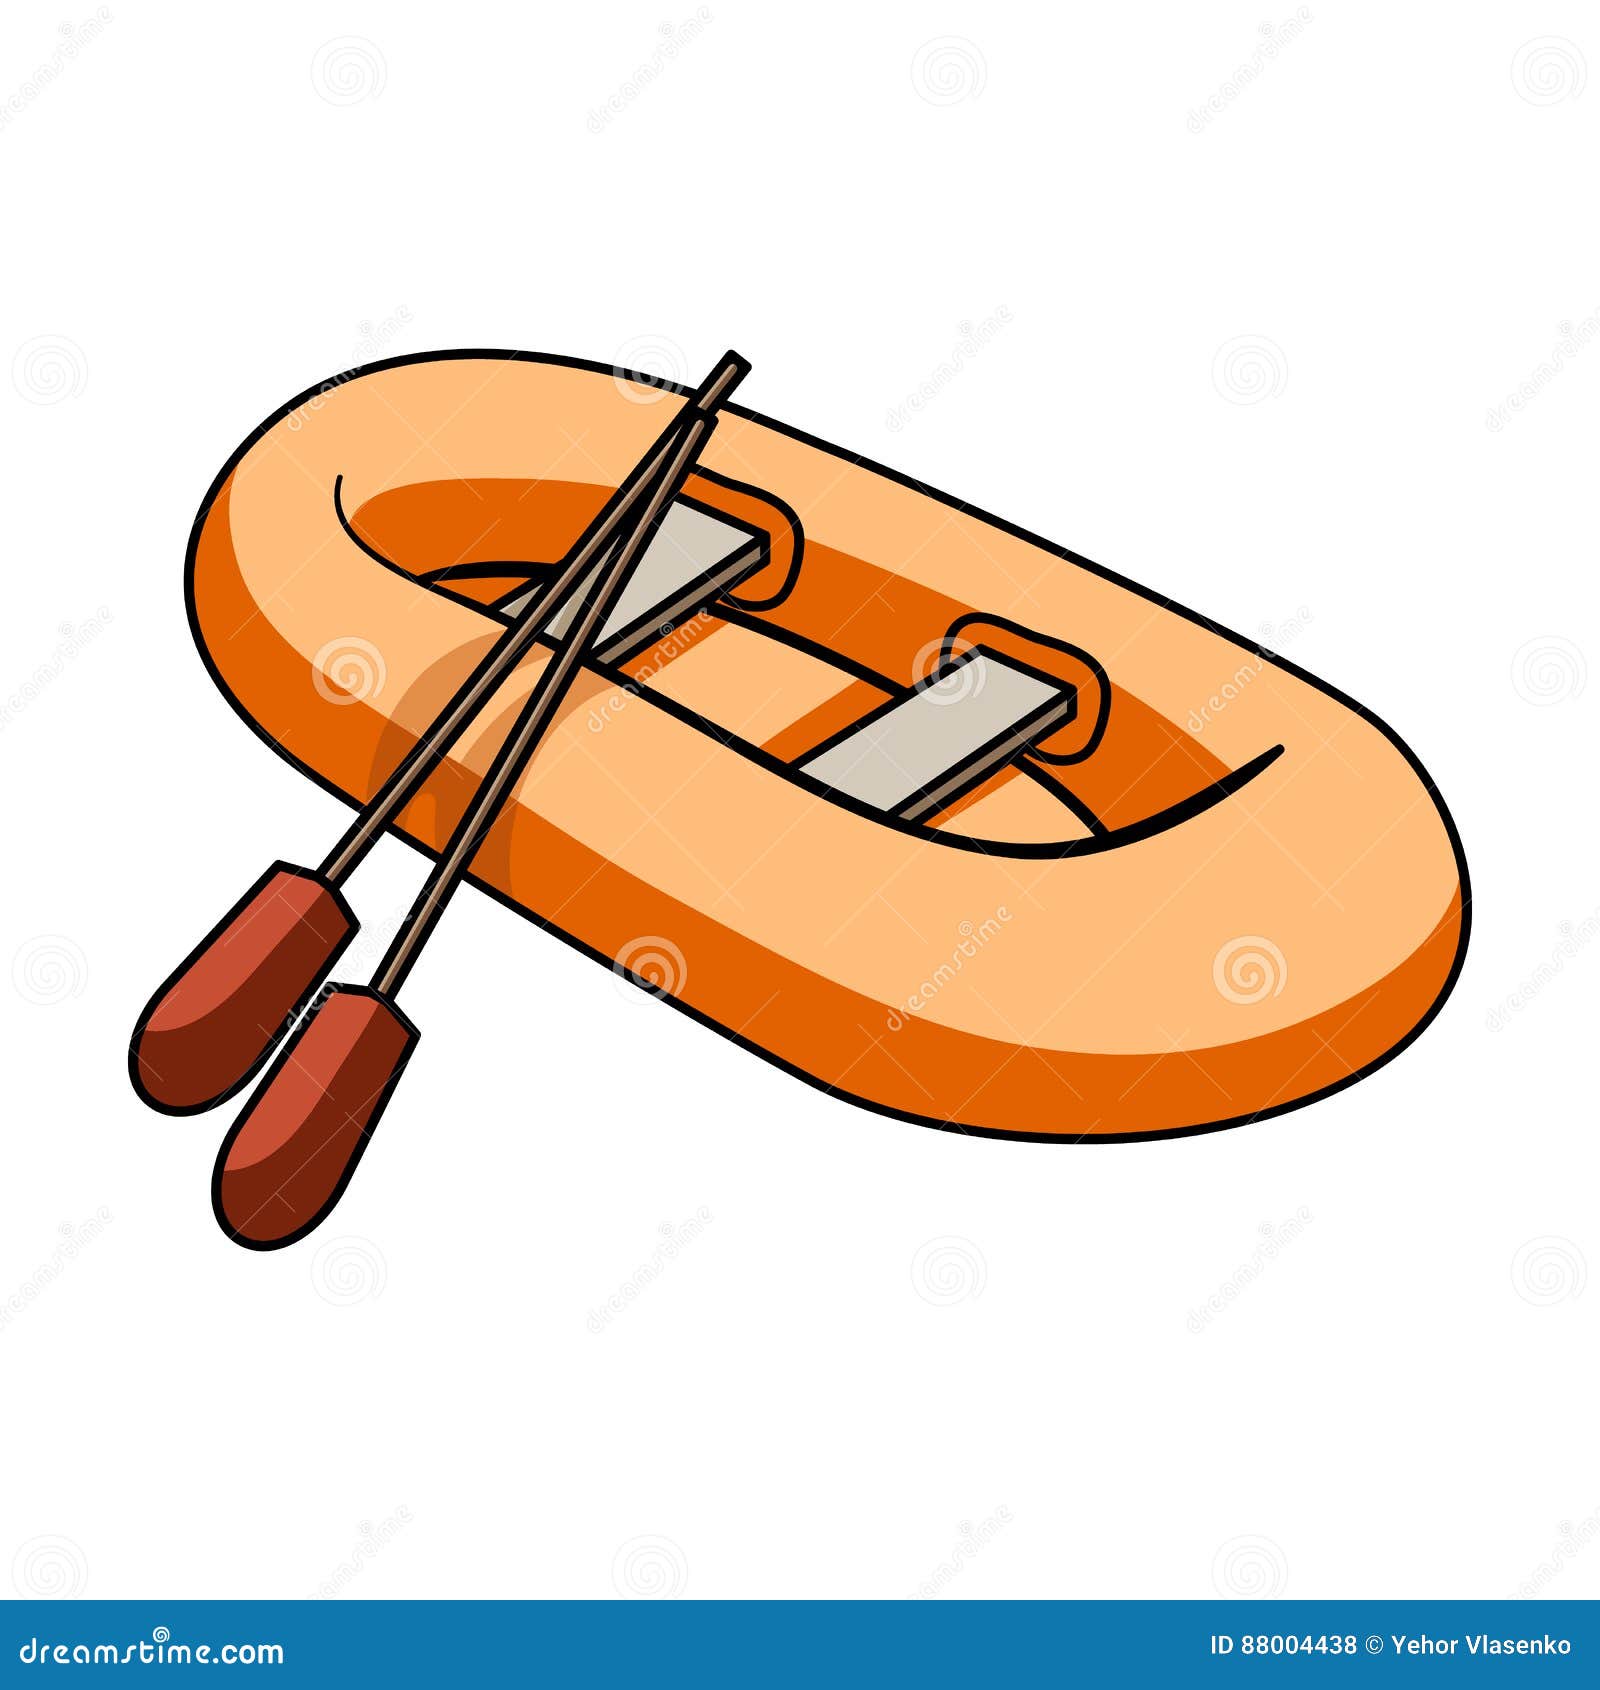 cartoon lifeboat